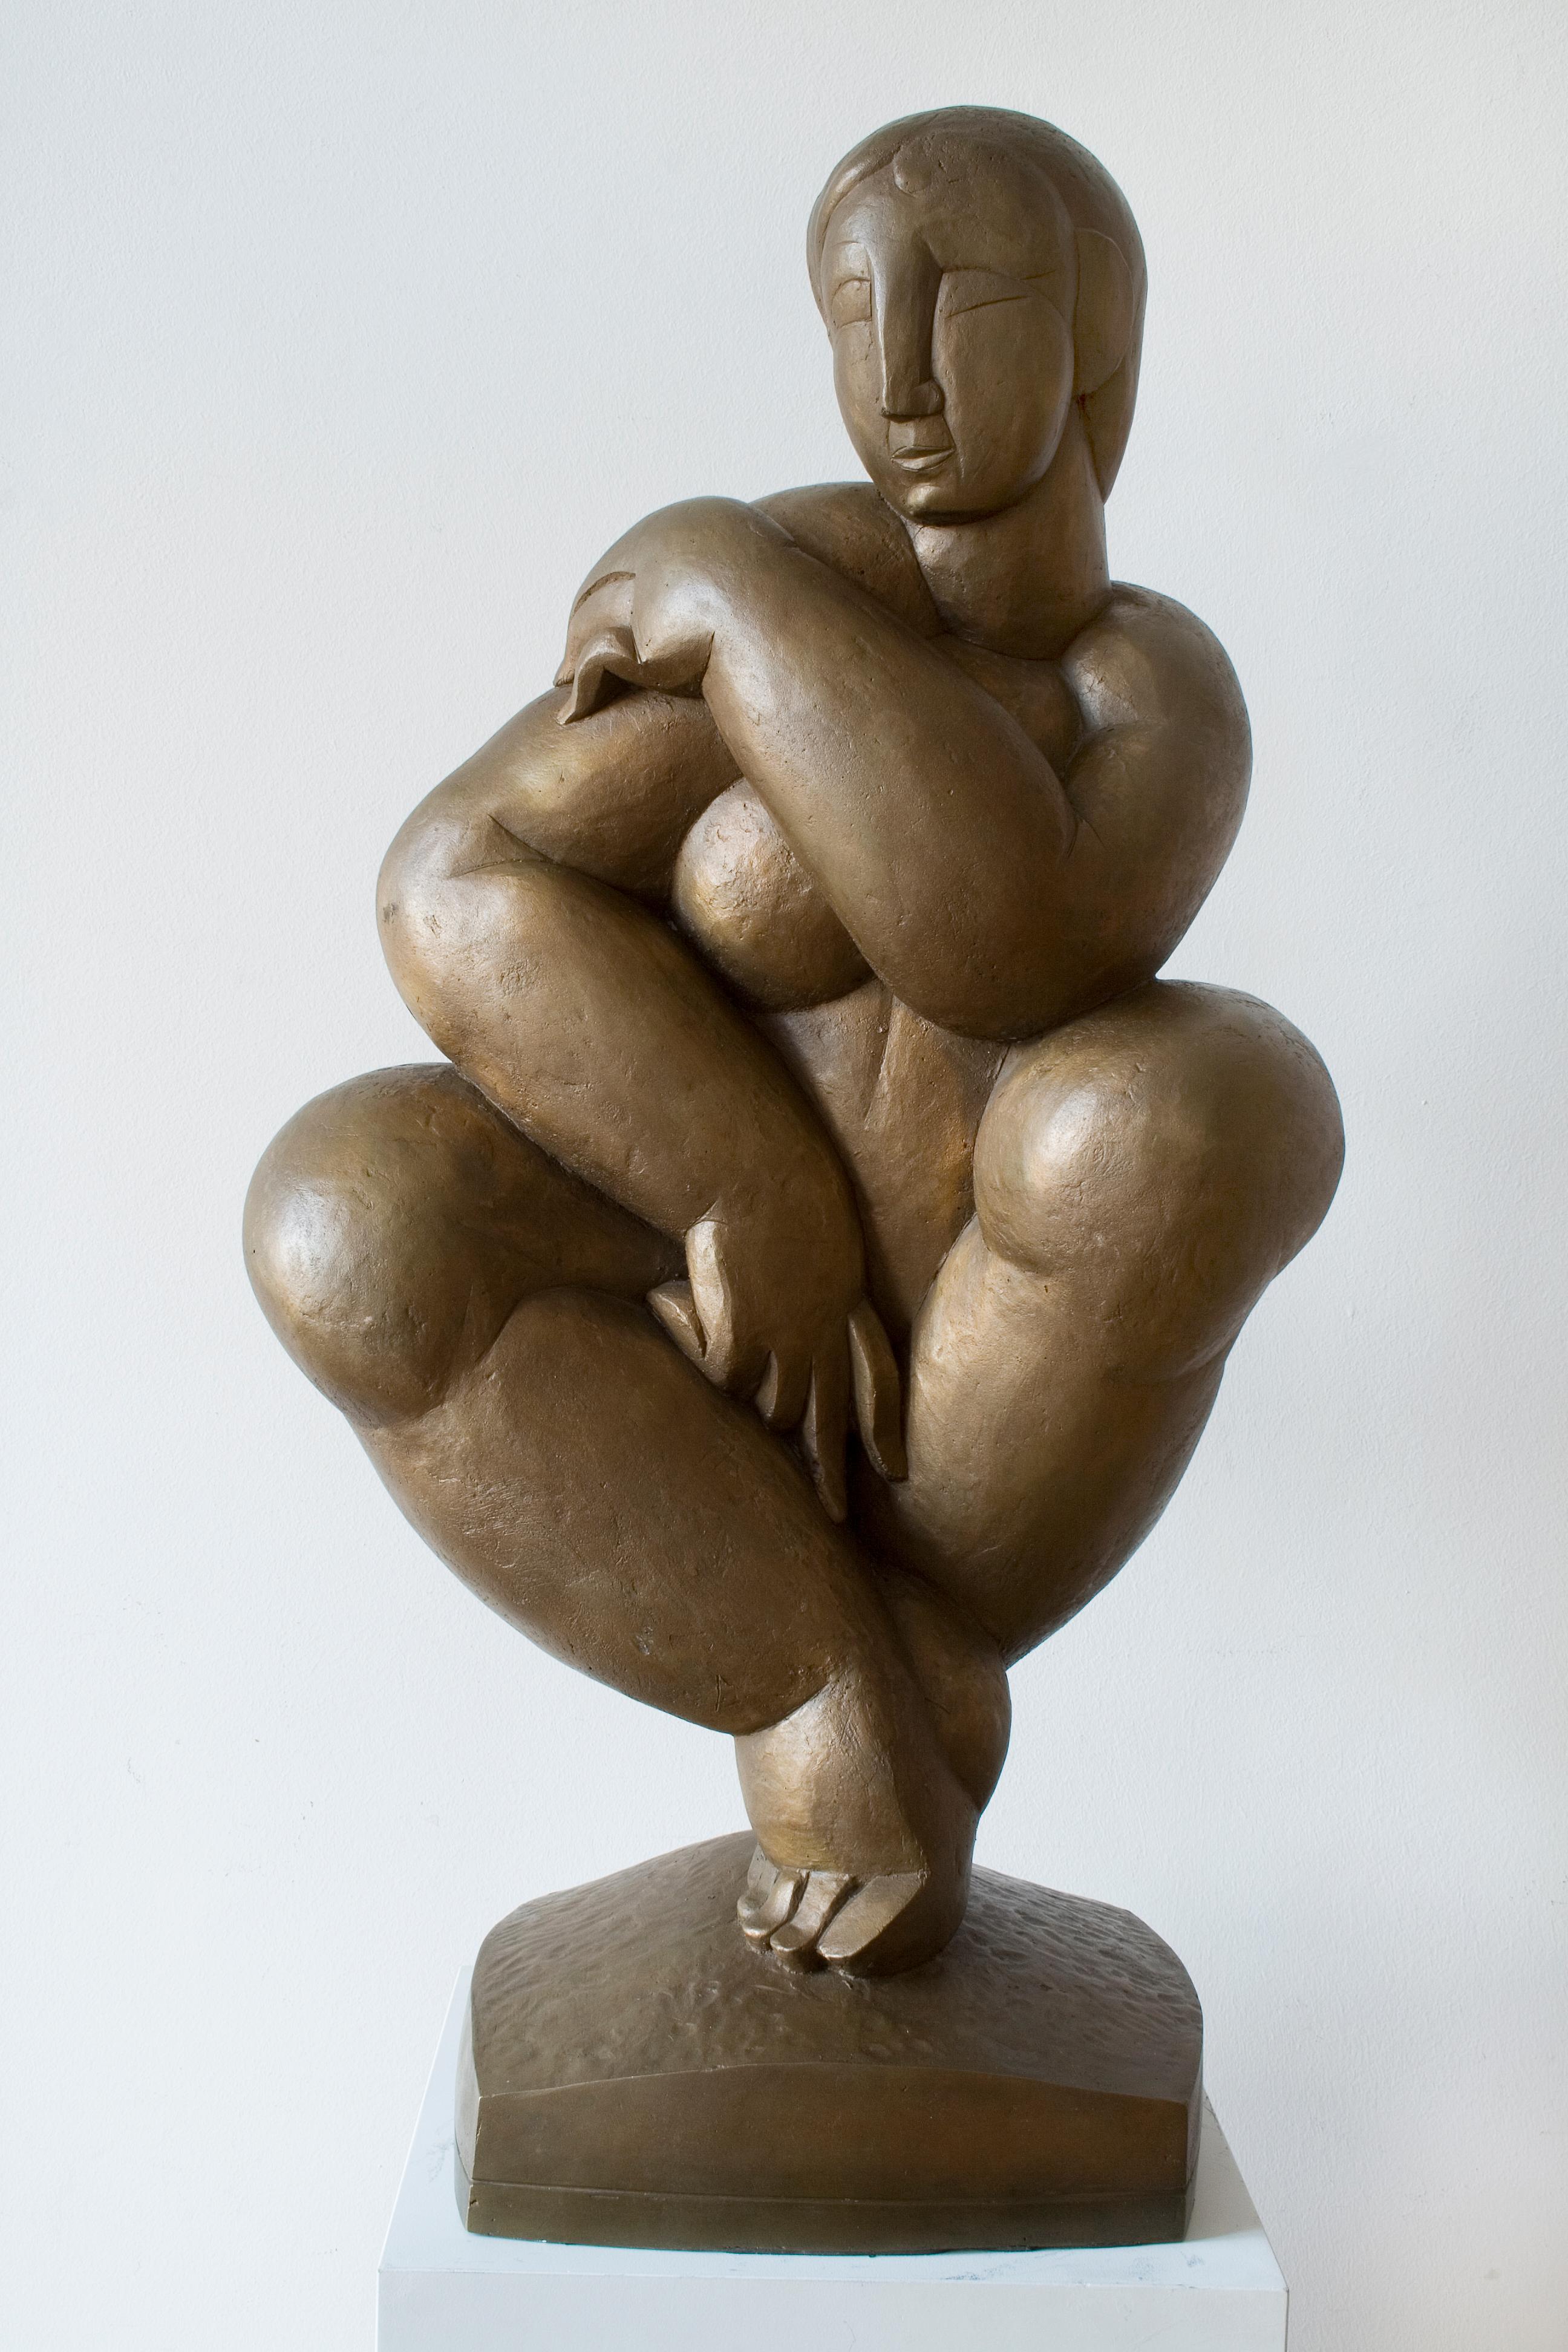 Giovanni Rindler, Ballerine au repos, 2002, bronze patiné, 70 x 45 x 24 cm. 